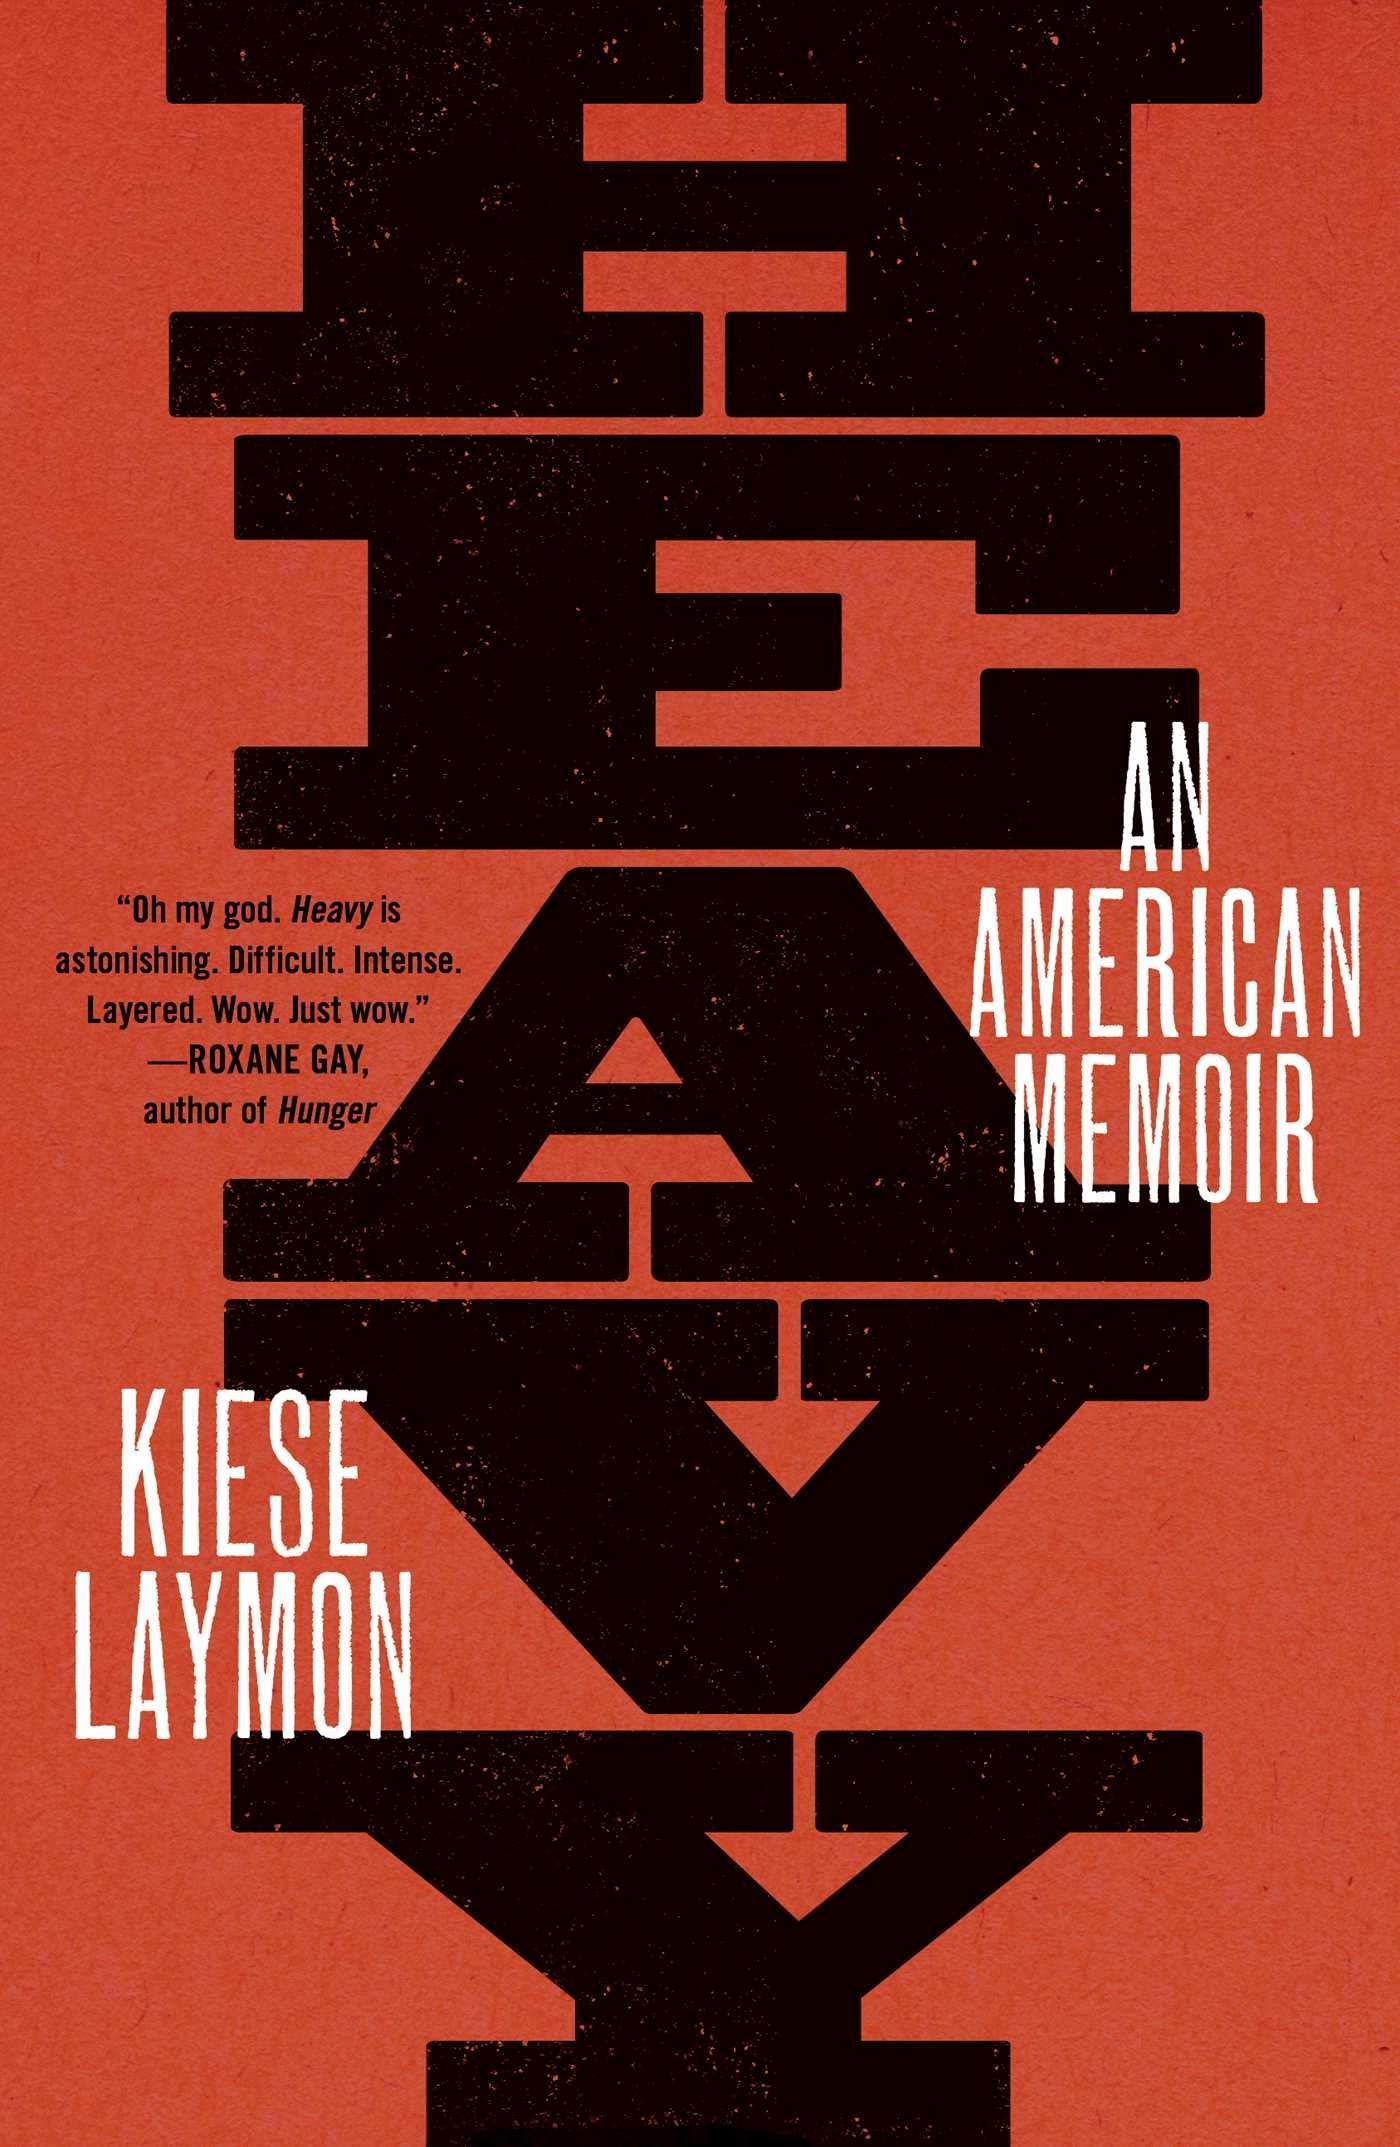 The cover of Heavy: An American Memoir